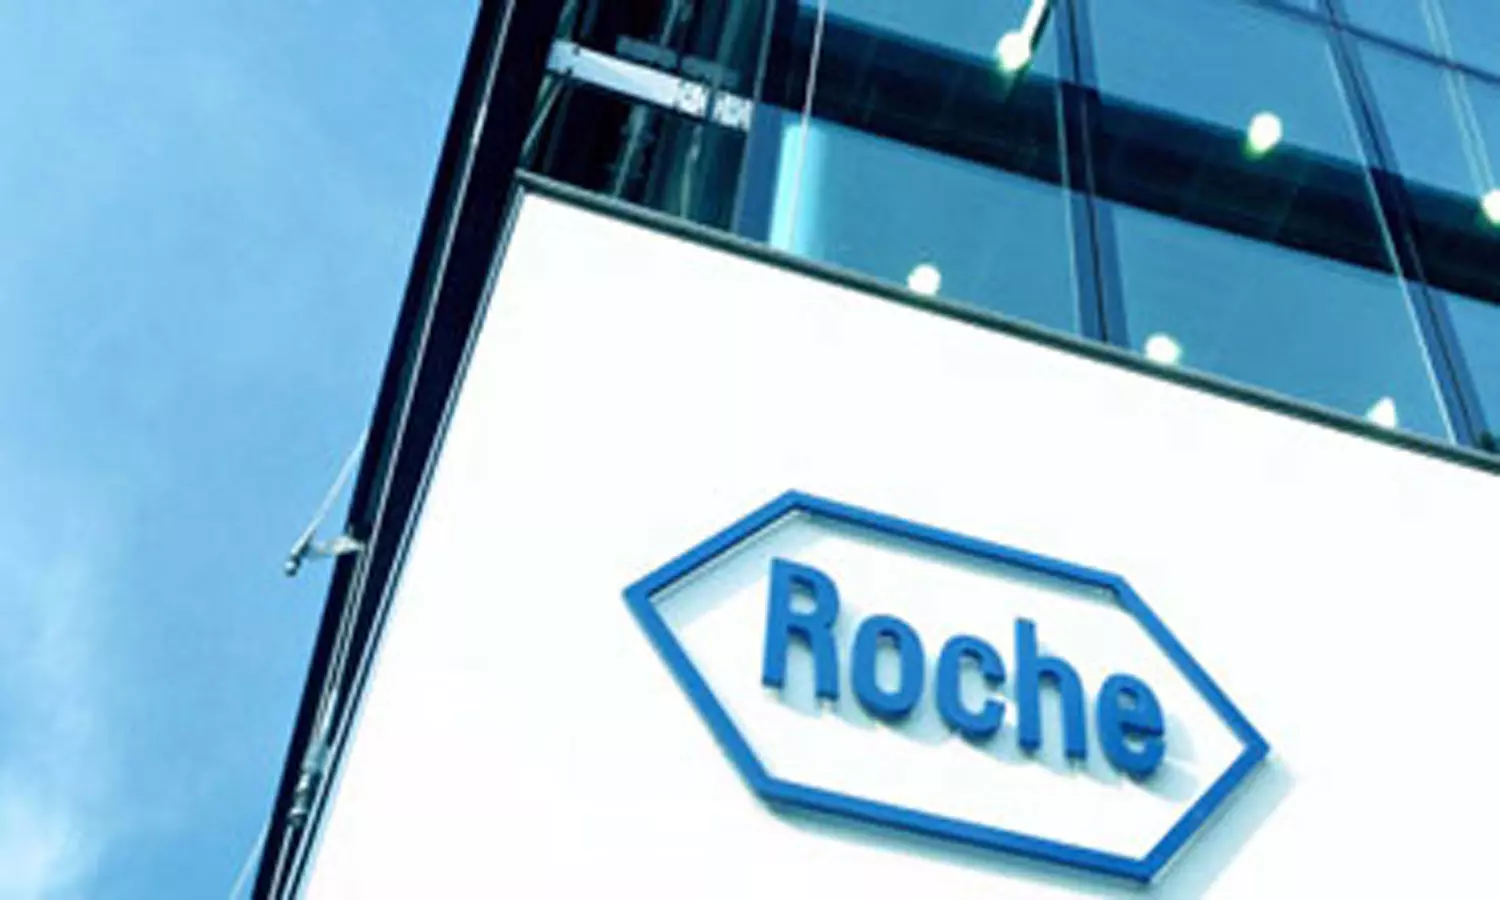 roche completes acquisition of tib molbiol